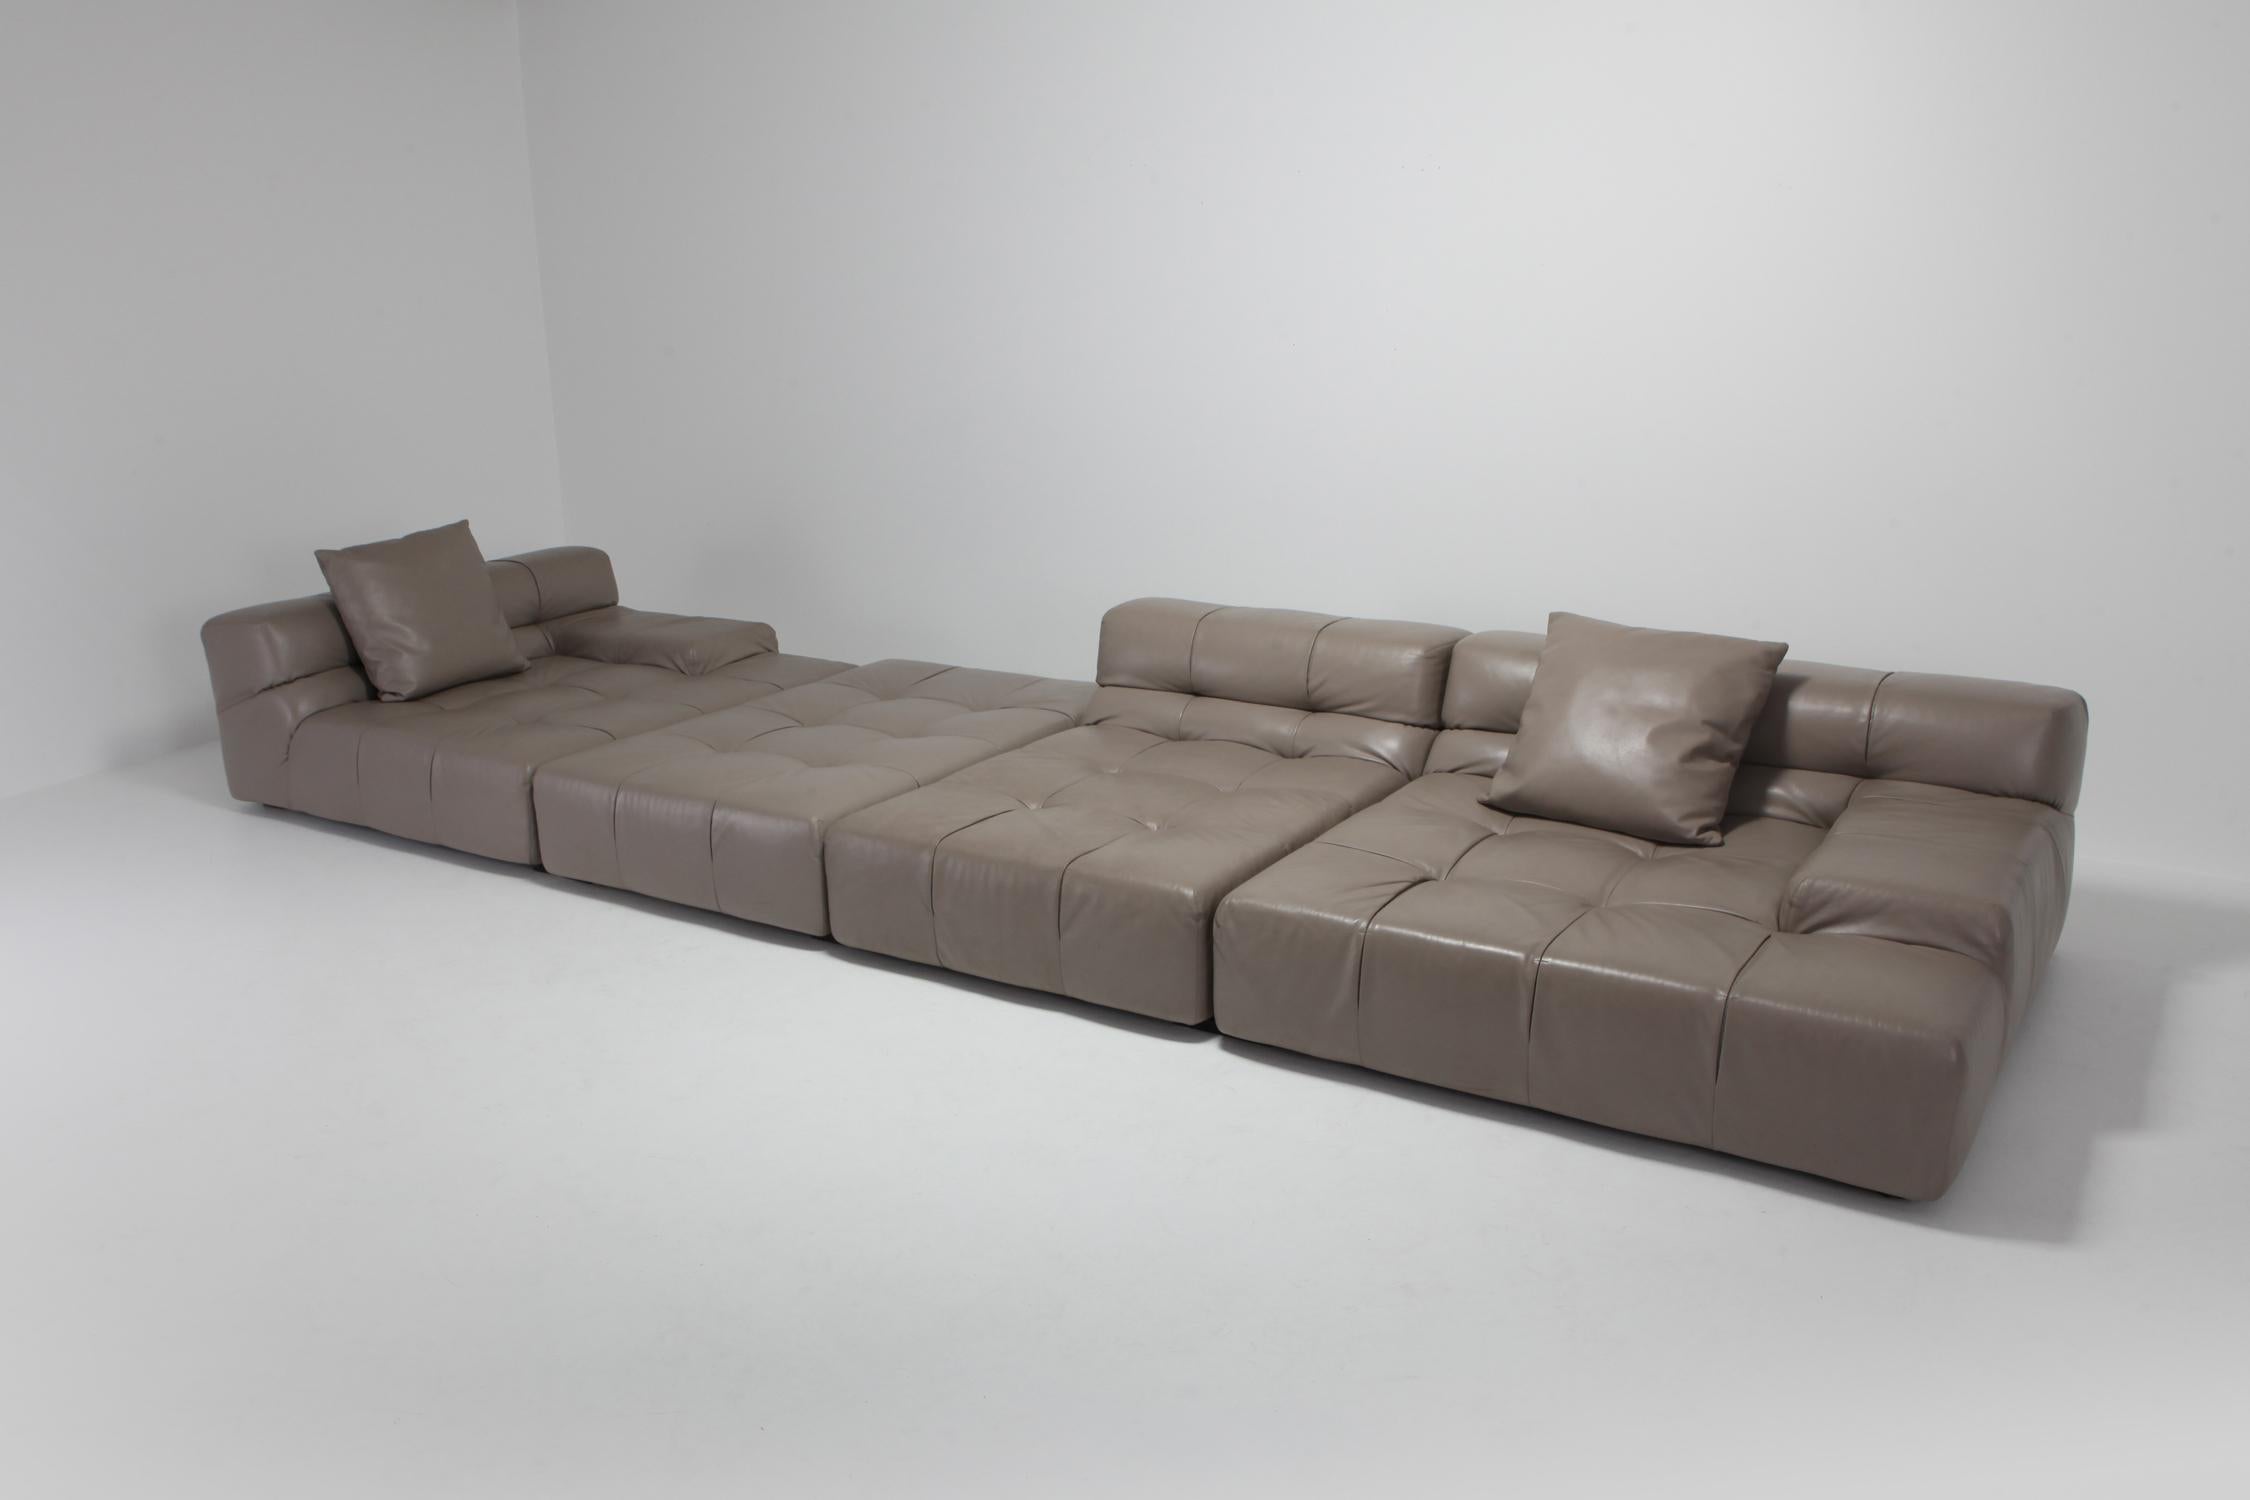 European Tufty Time B&B Italia Taupe Leather Sectional Sofa by Patricia Urquiola